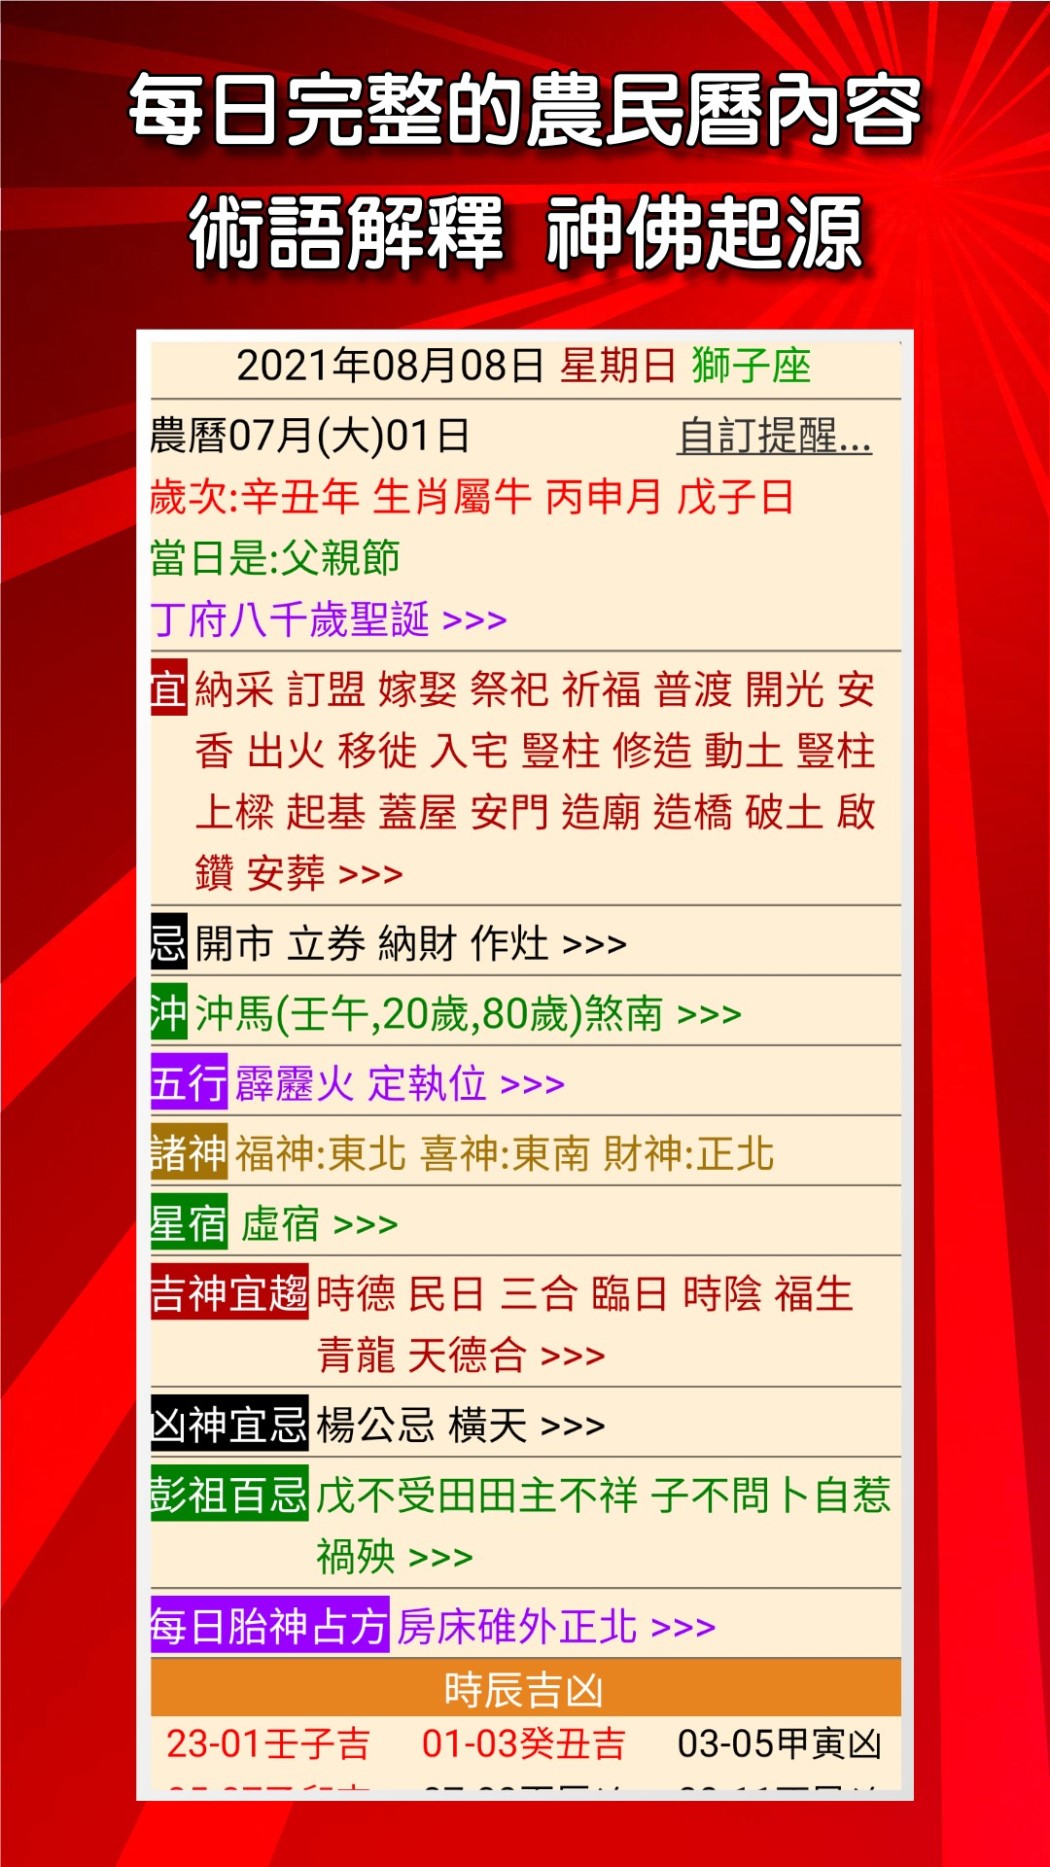 Android application 開運農民曆-農曆擇吉日 萬年曆 screenshort